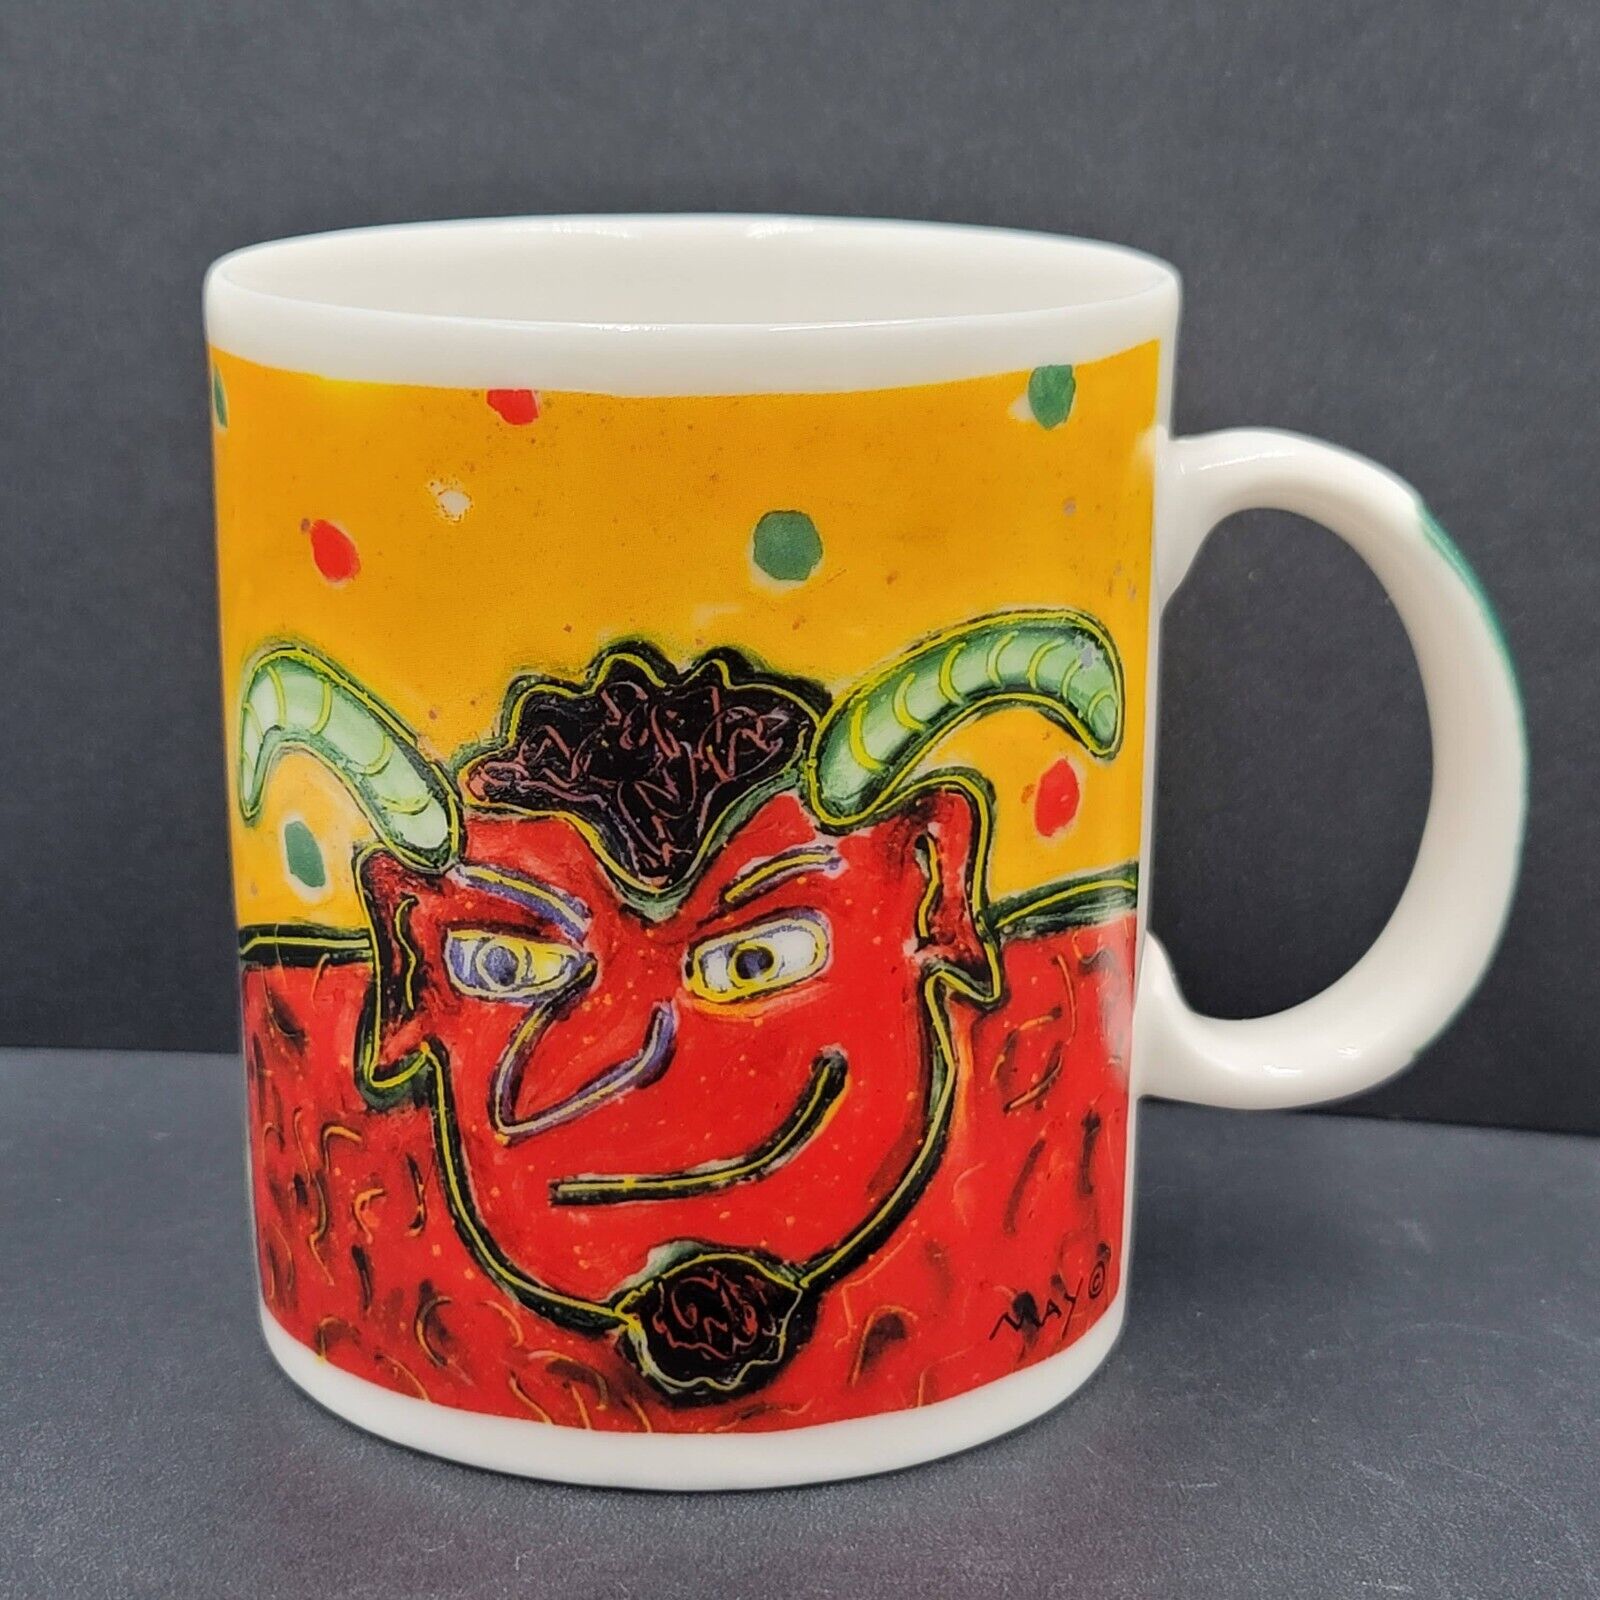 Chaleur Coffee Mug Designed By Dan May Angel And Devil